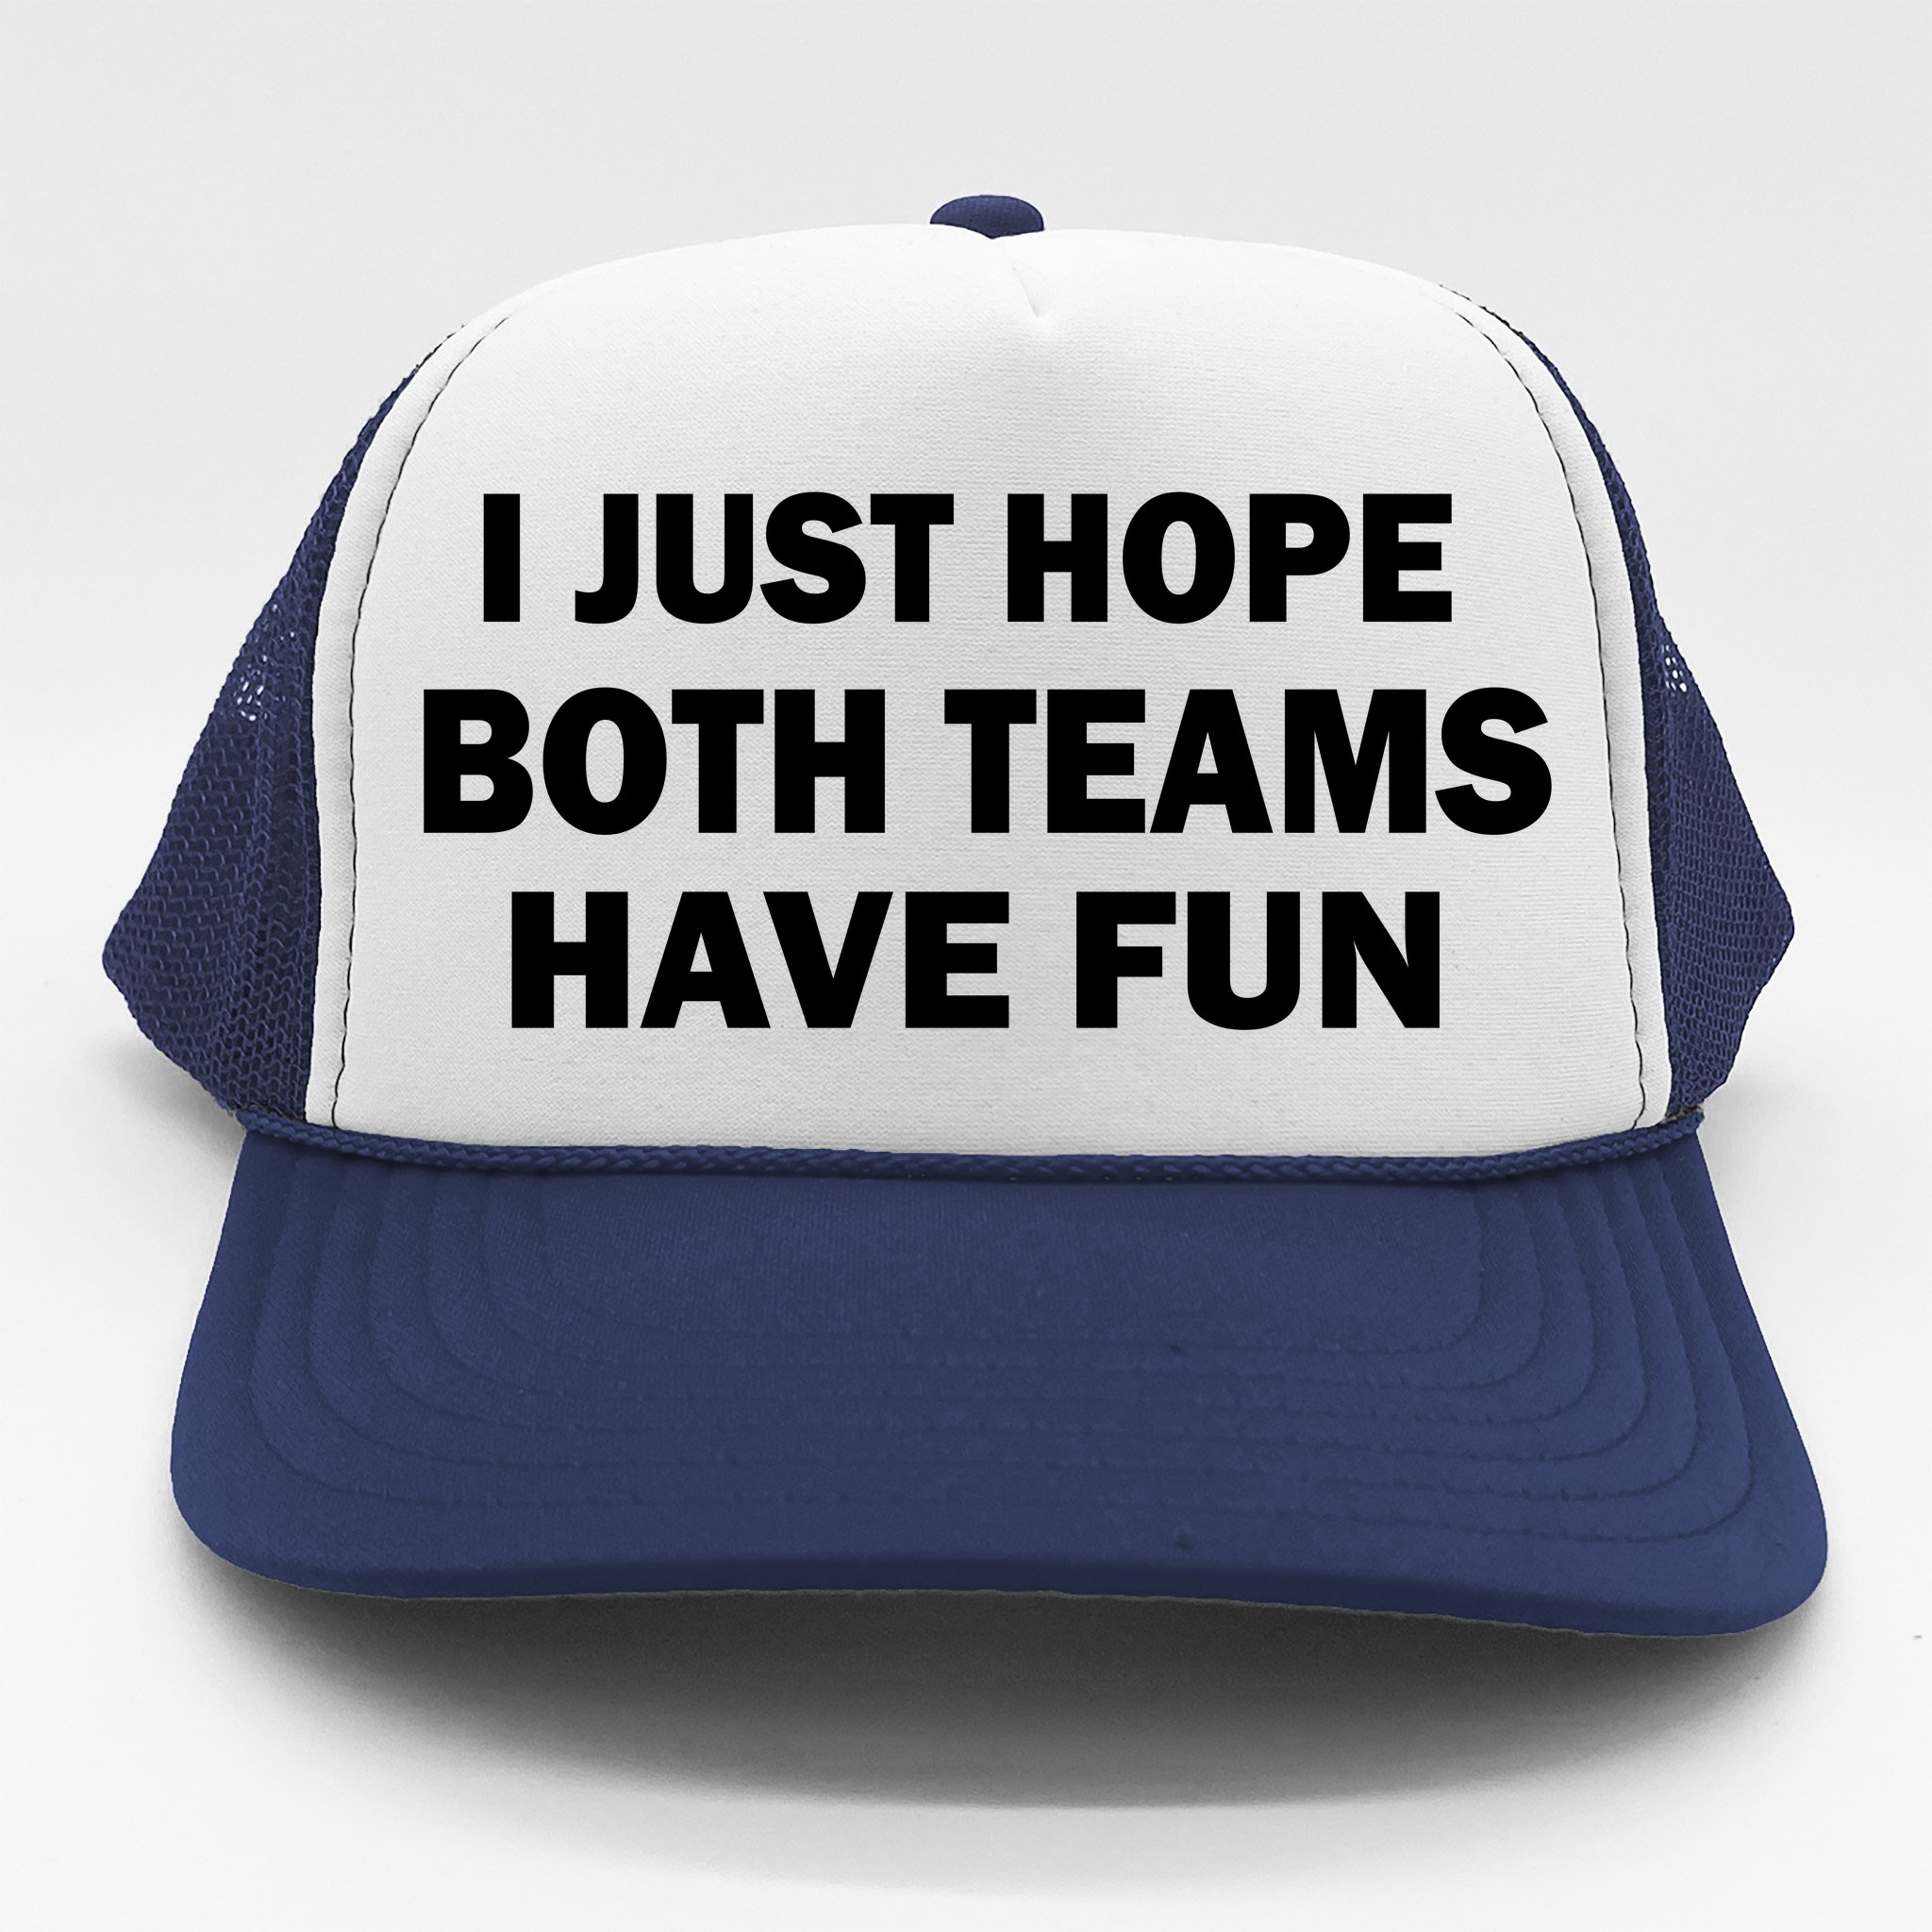 Design your team's custom sublimated baseball jerseys only @ TSP